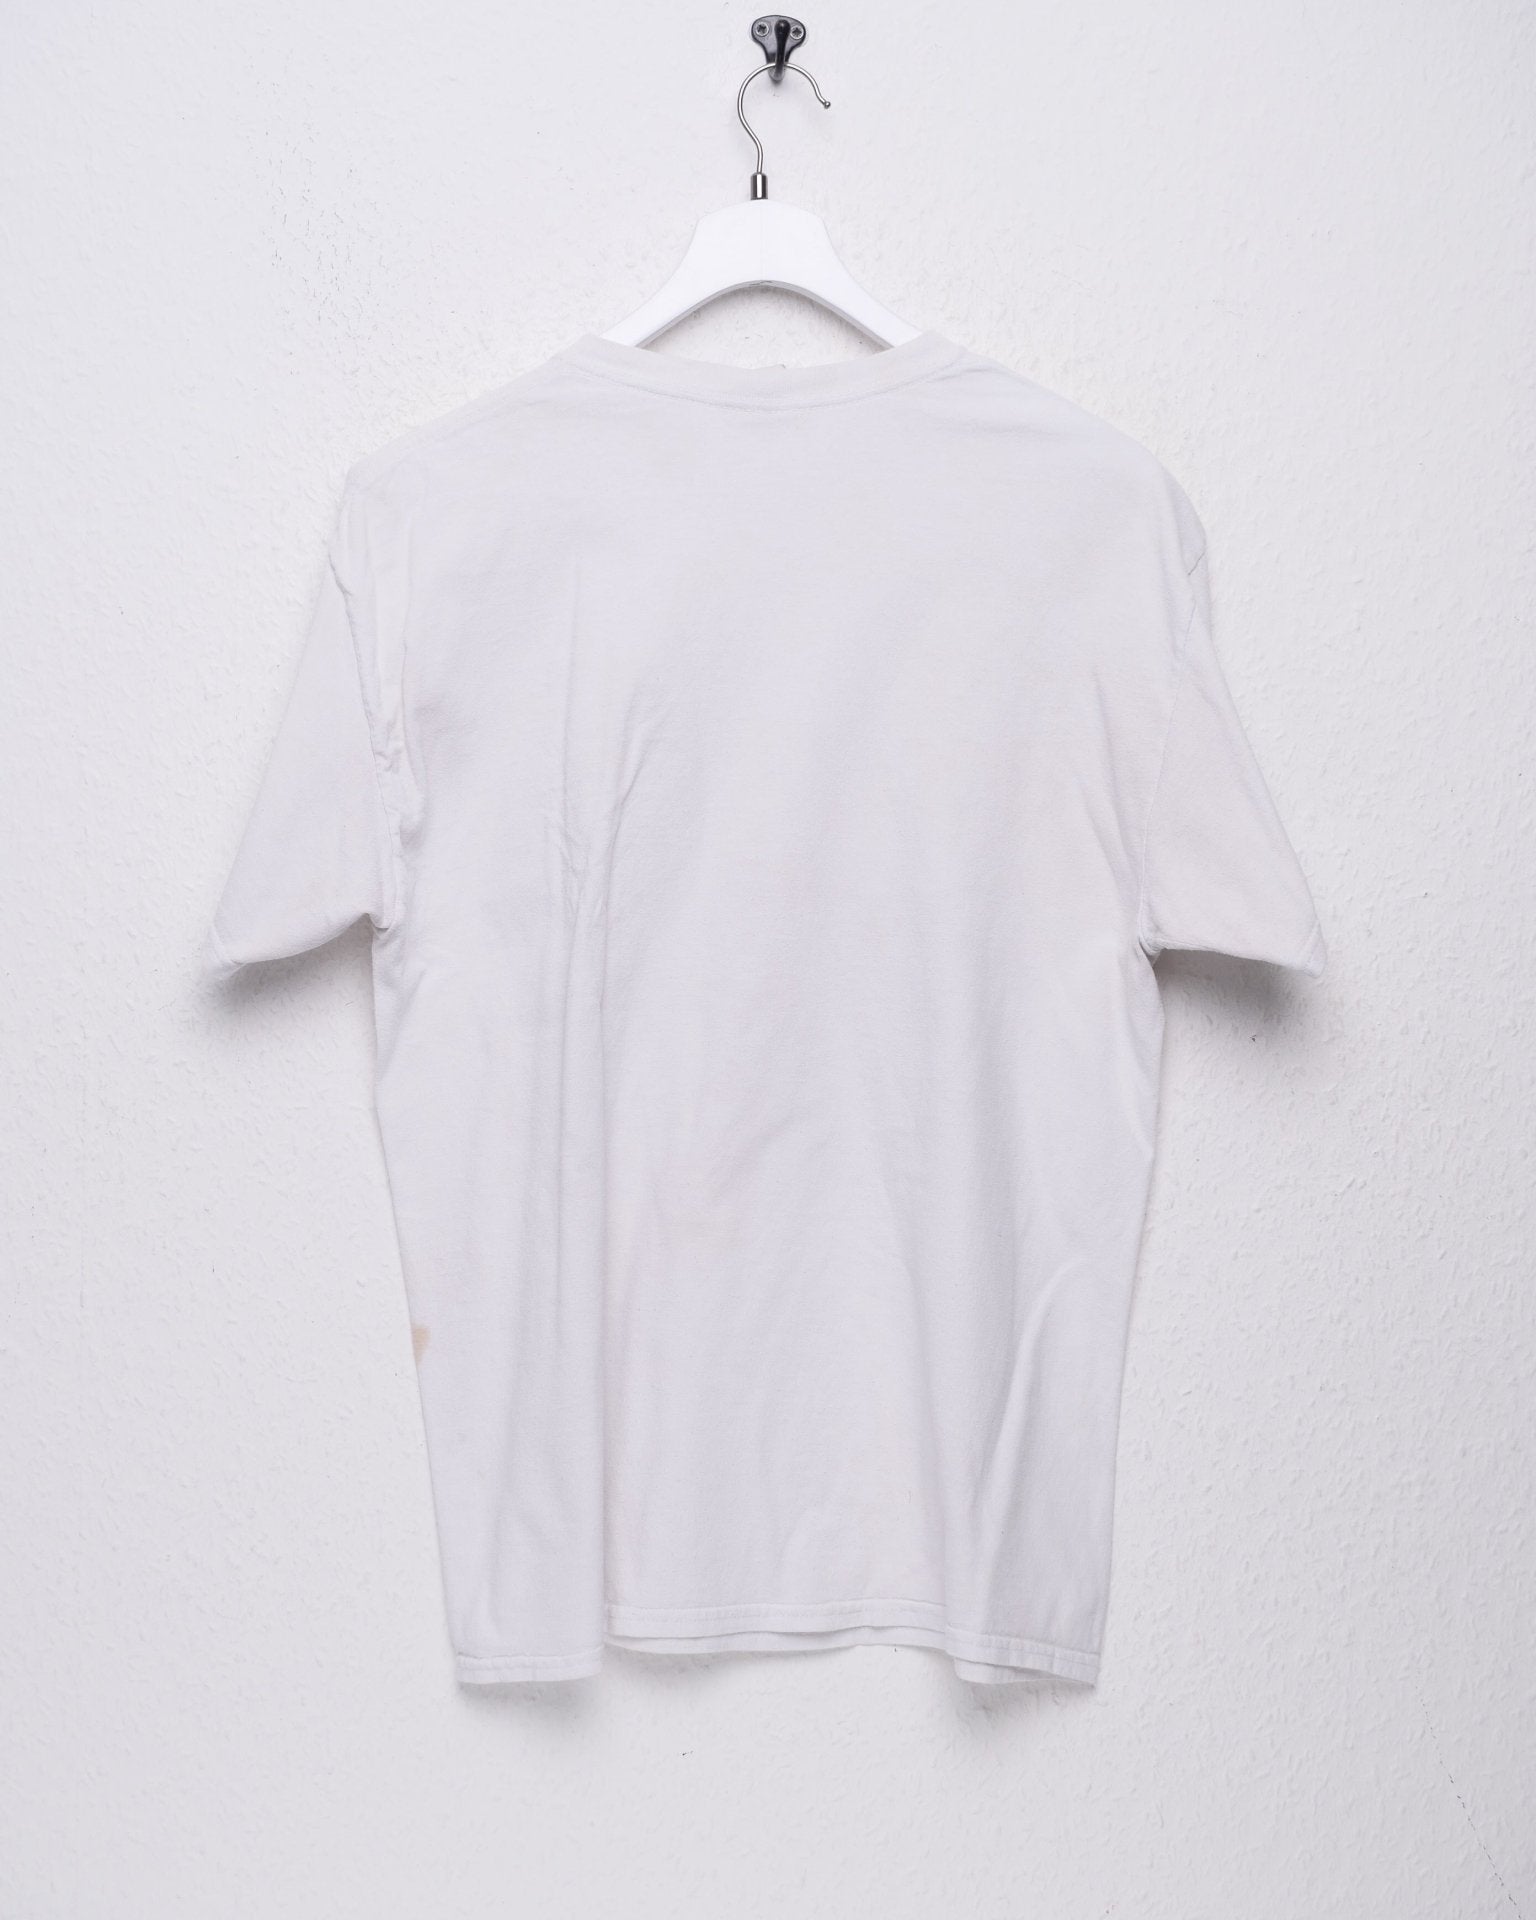 Champions printed Graphic white Shirt - Peeces